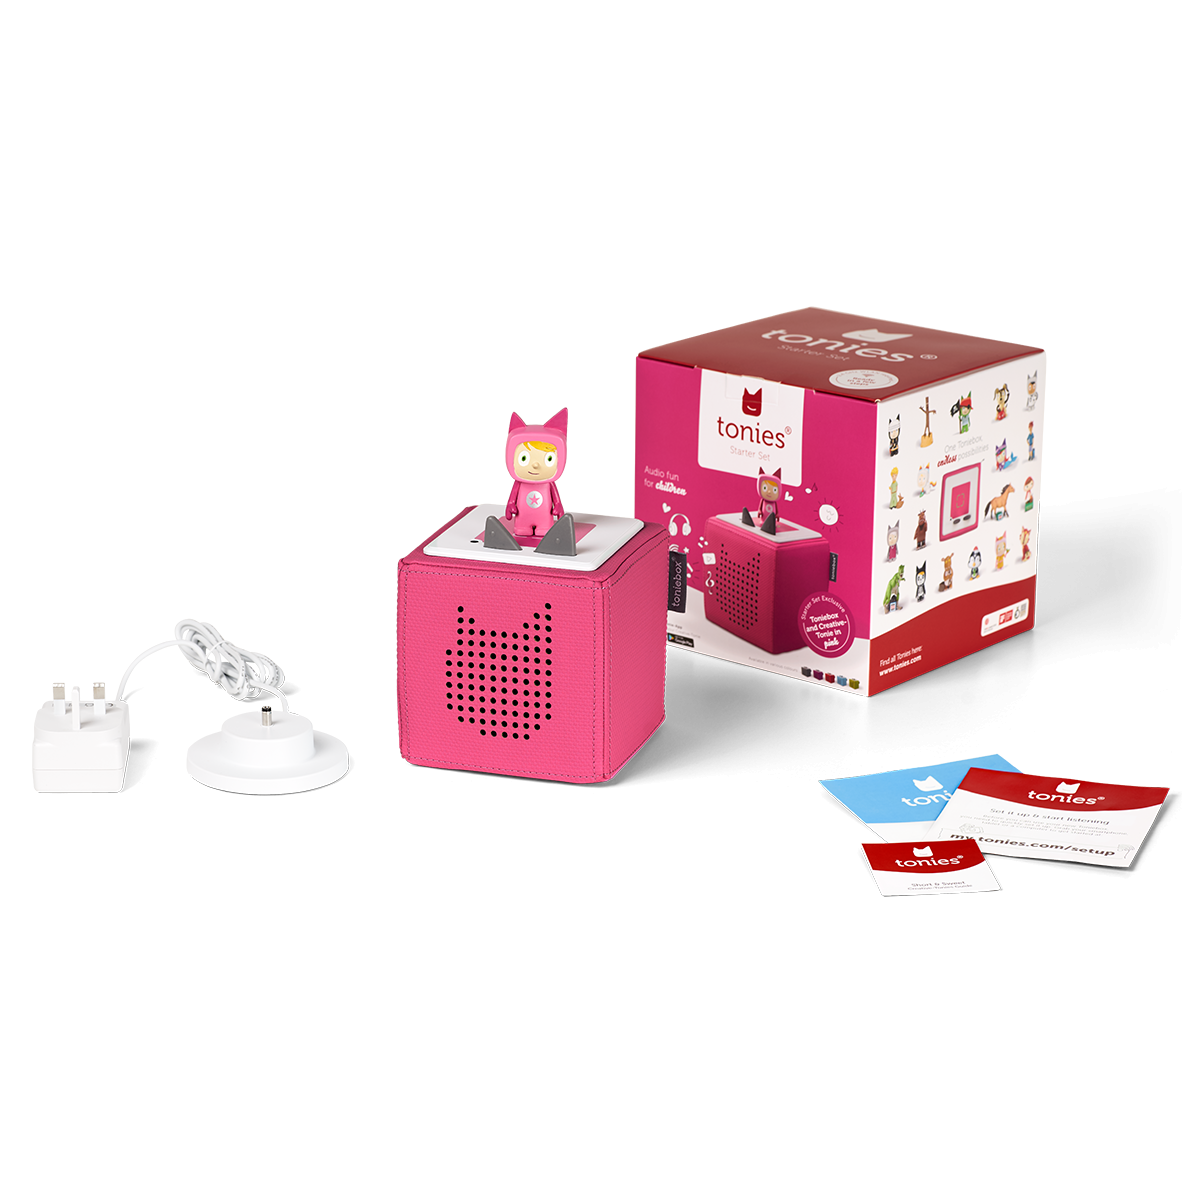 Buy TONIES Toniebox Starter Set (Pink), Peter Rabbit, Paddington